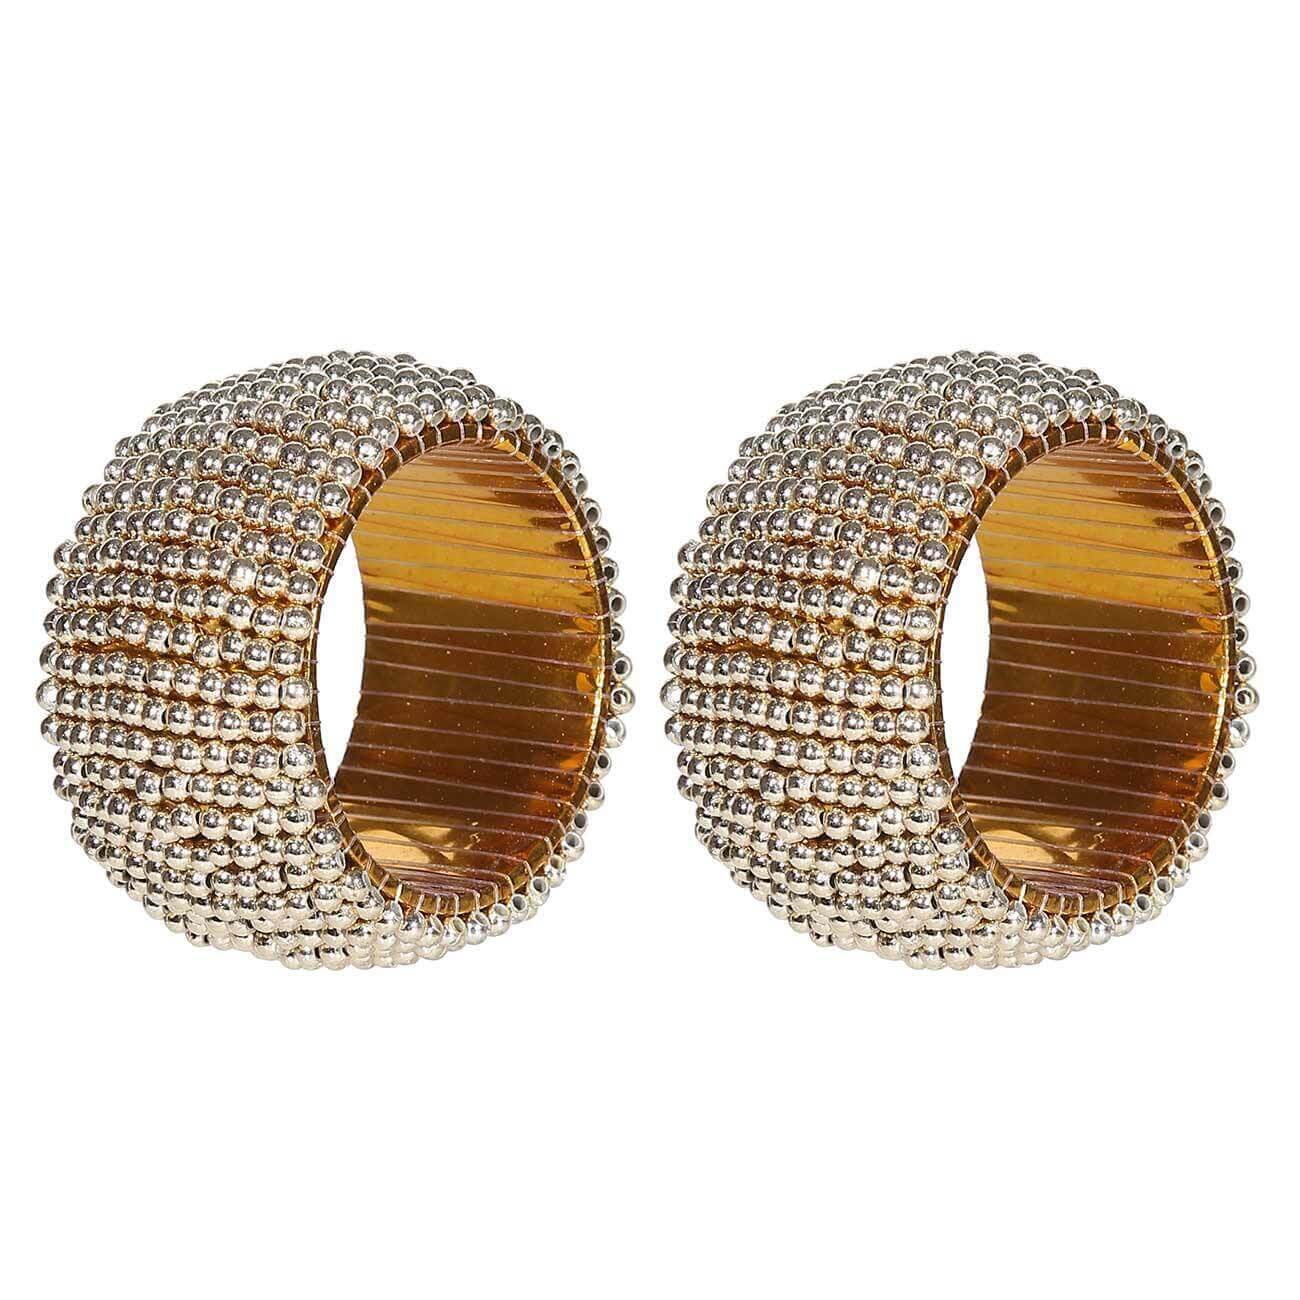 Кольцо для салфеток, 5 см, 2 шт, бисер, круглое, золотистое, Shiny beads подставка под кружку 10 см 2 шт бисер круглая шампань shiny beads